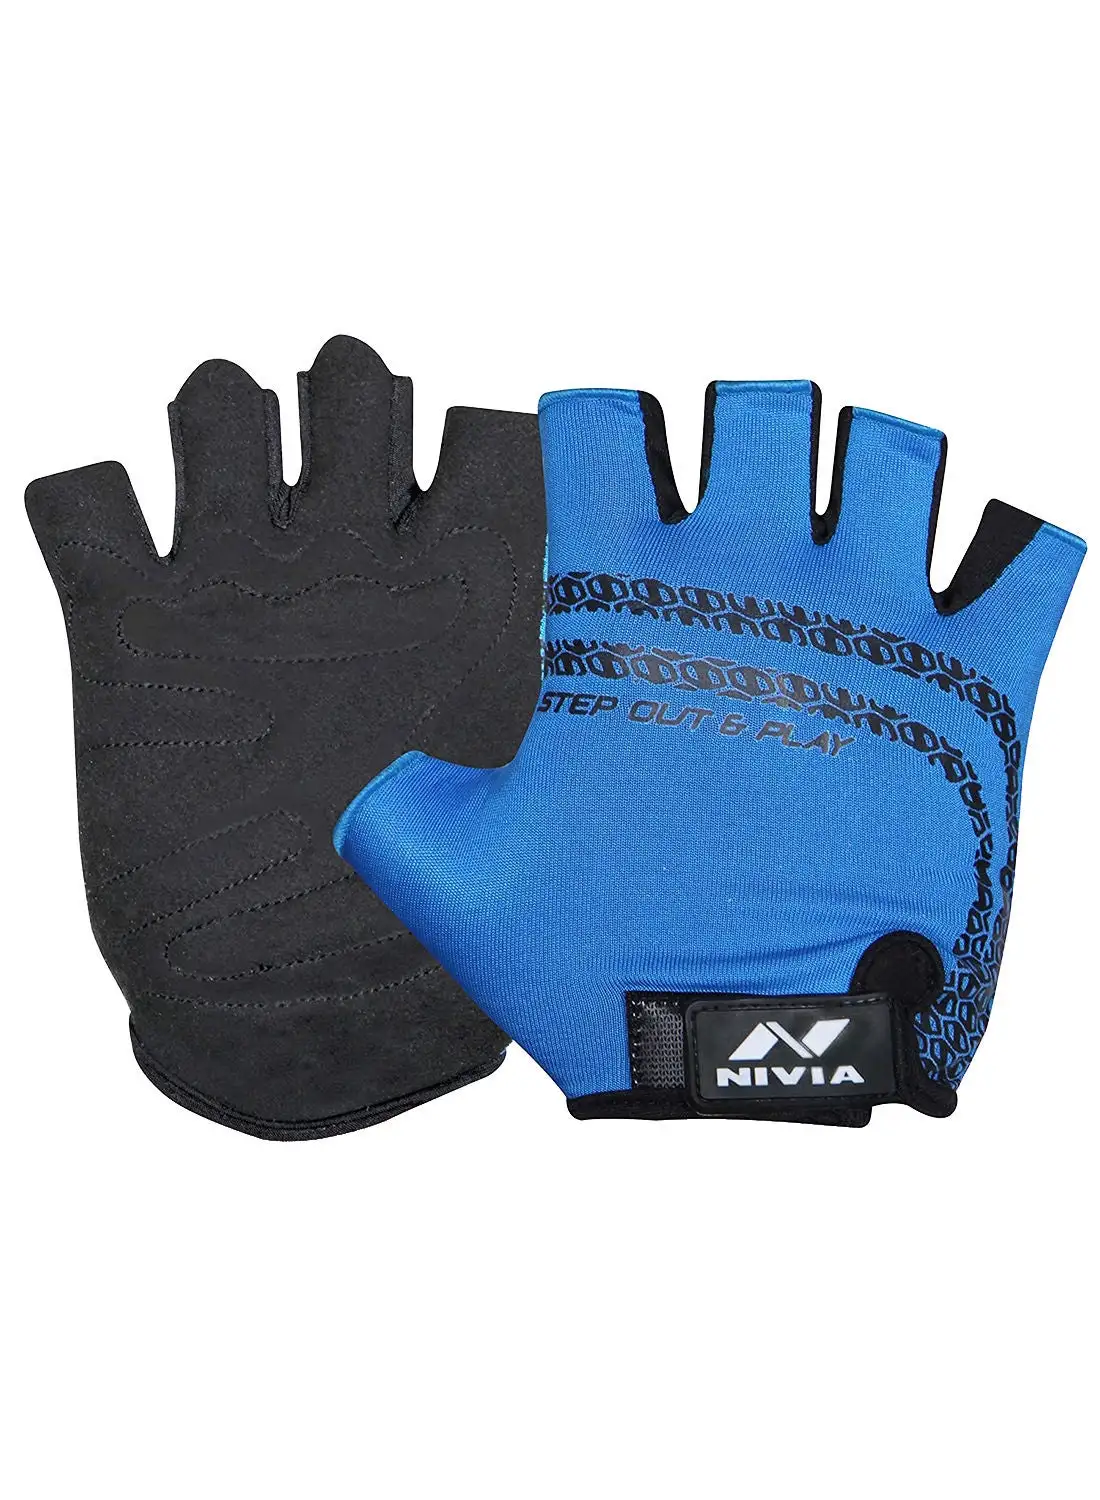 Nivia Copperhead Sports Gloves Medium